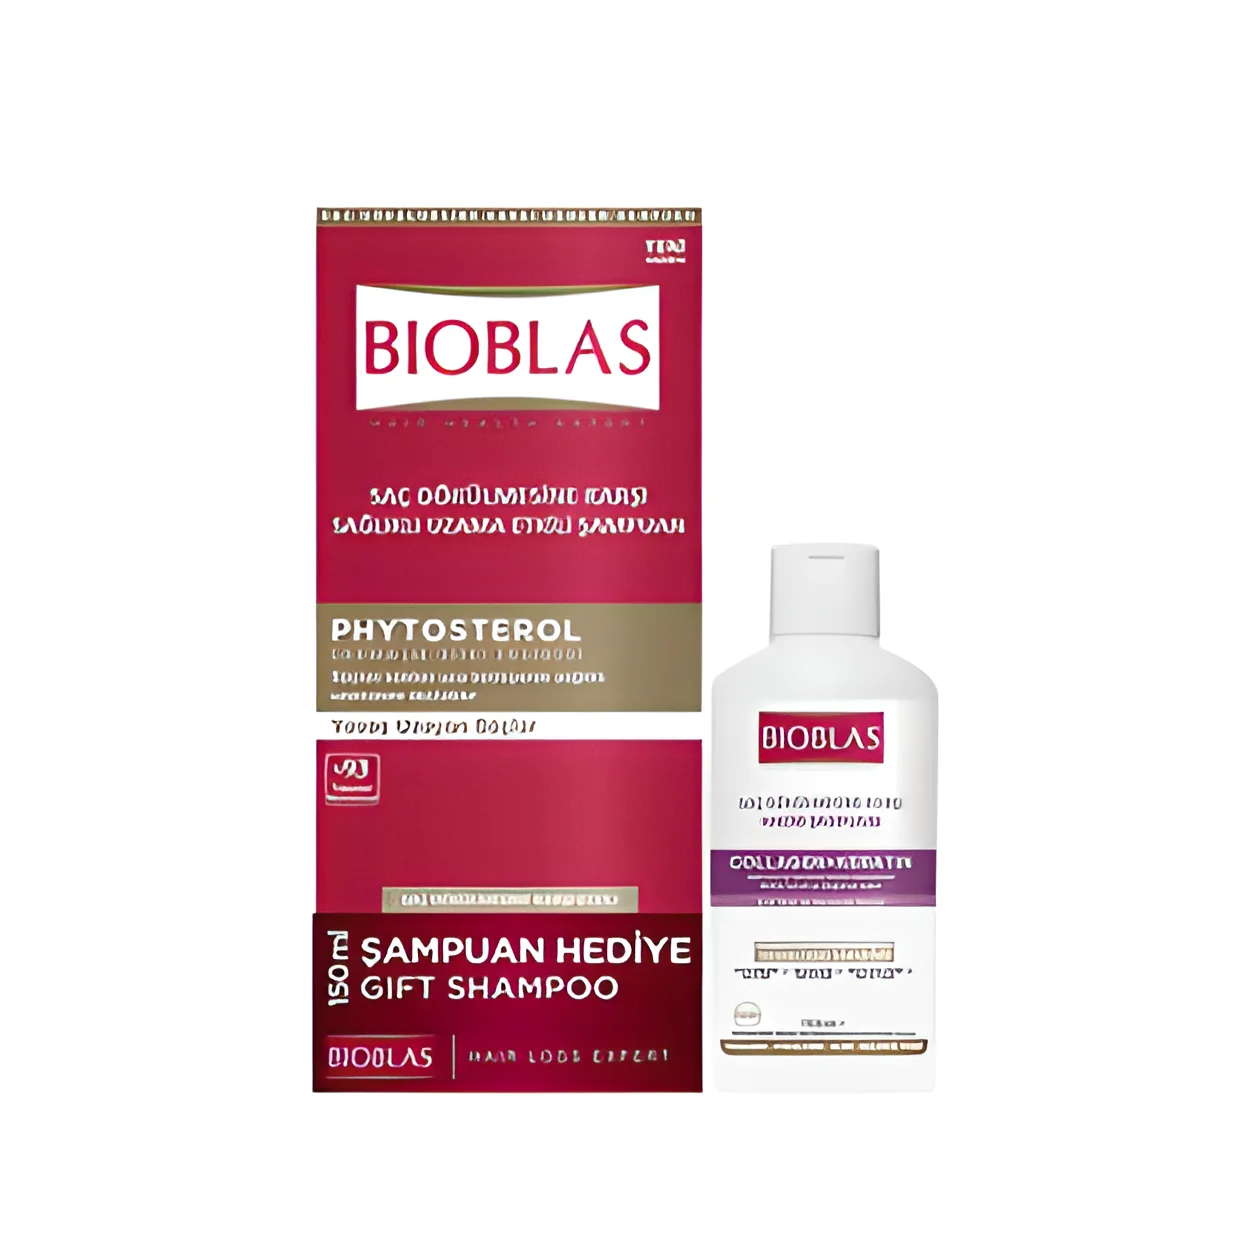 

Bioblas Phytosterol Creeper Plant Extract Anti-Hair Loss Healthy Elongation Effective 360 ml + 150 ml Gift Shampoo